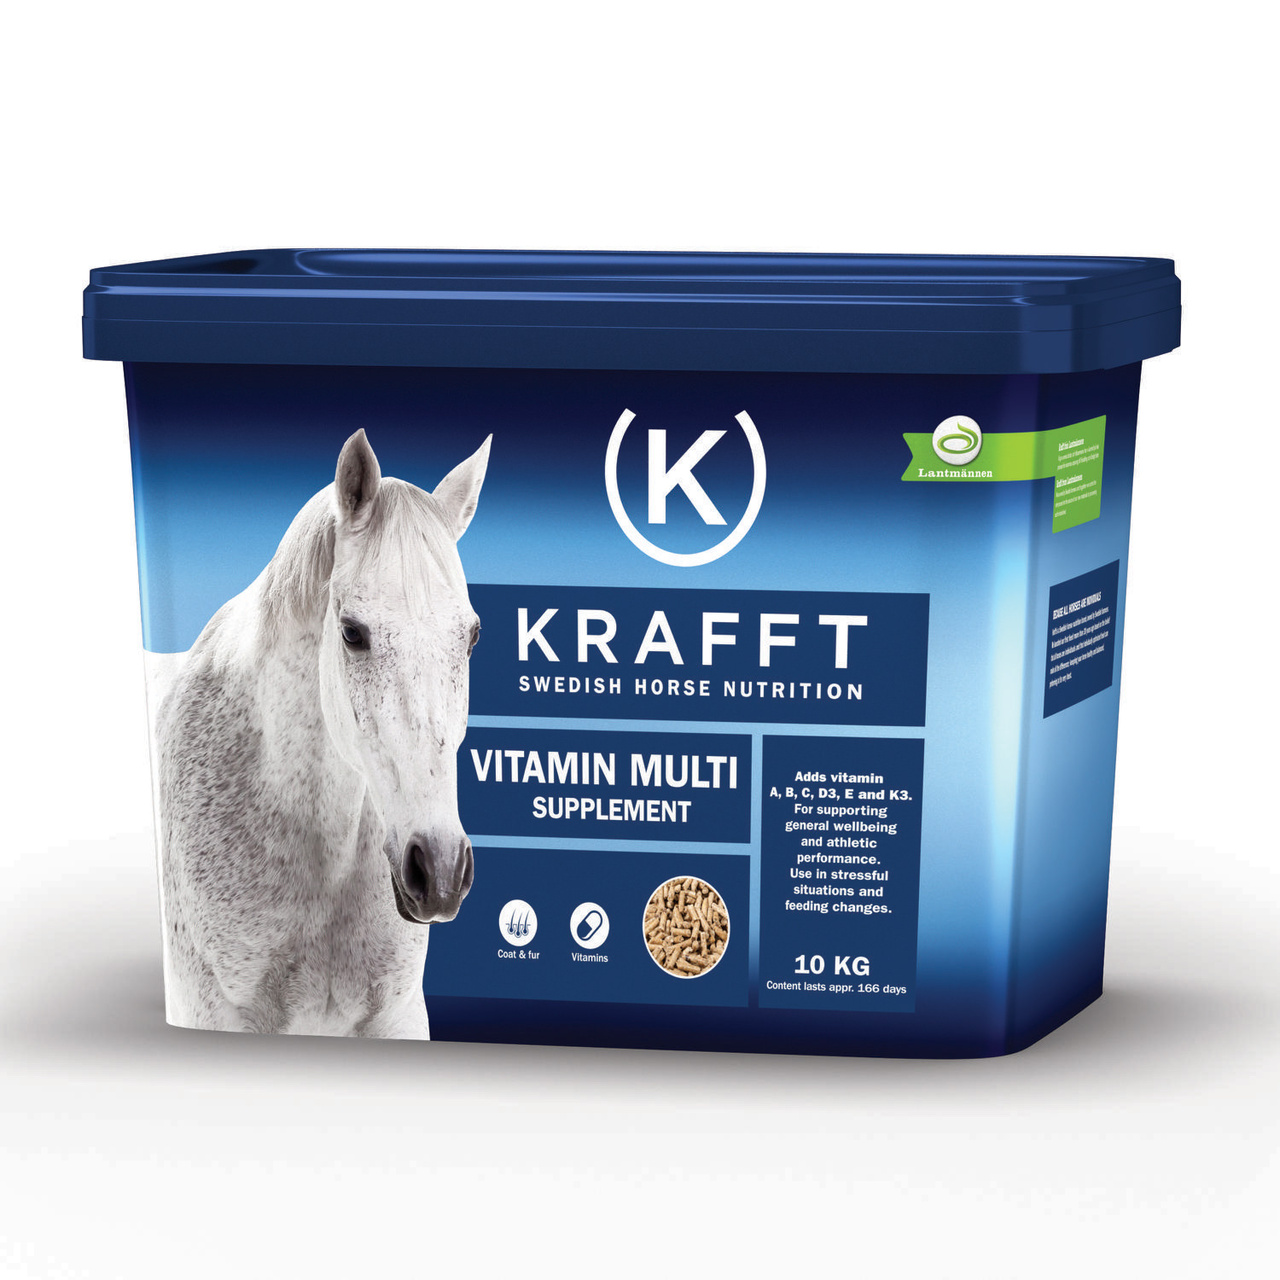 Krafft vitamin multi 10kg